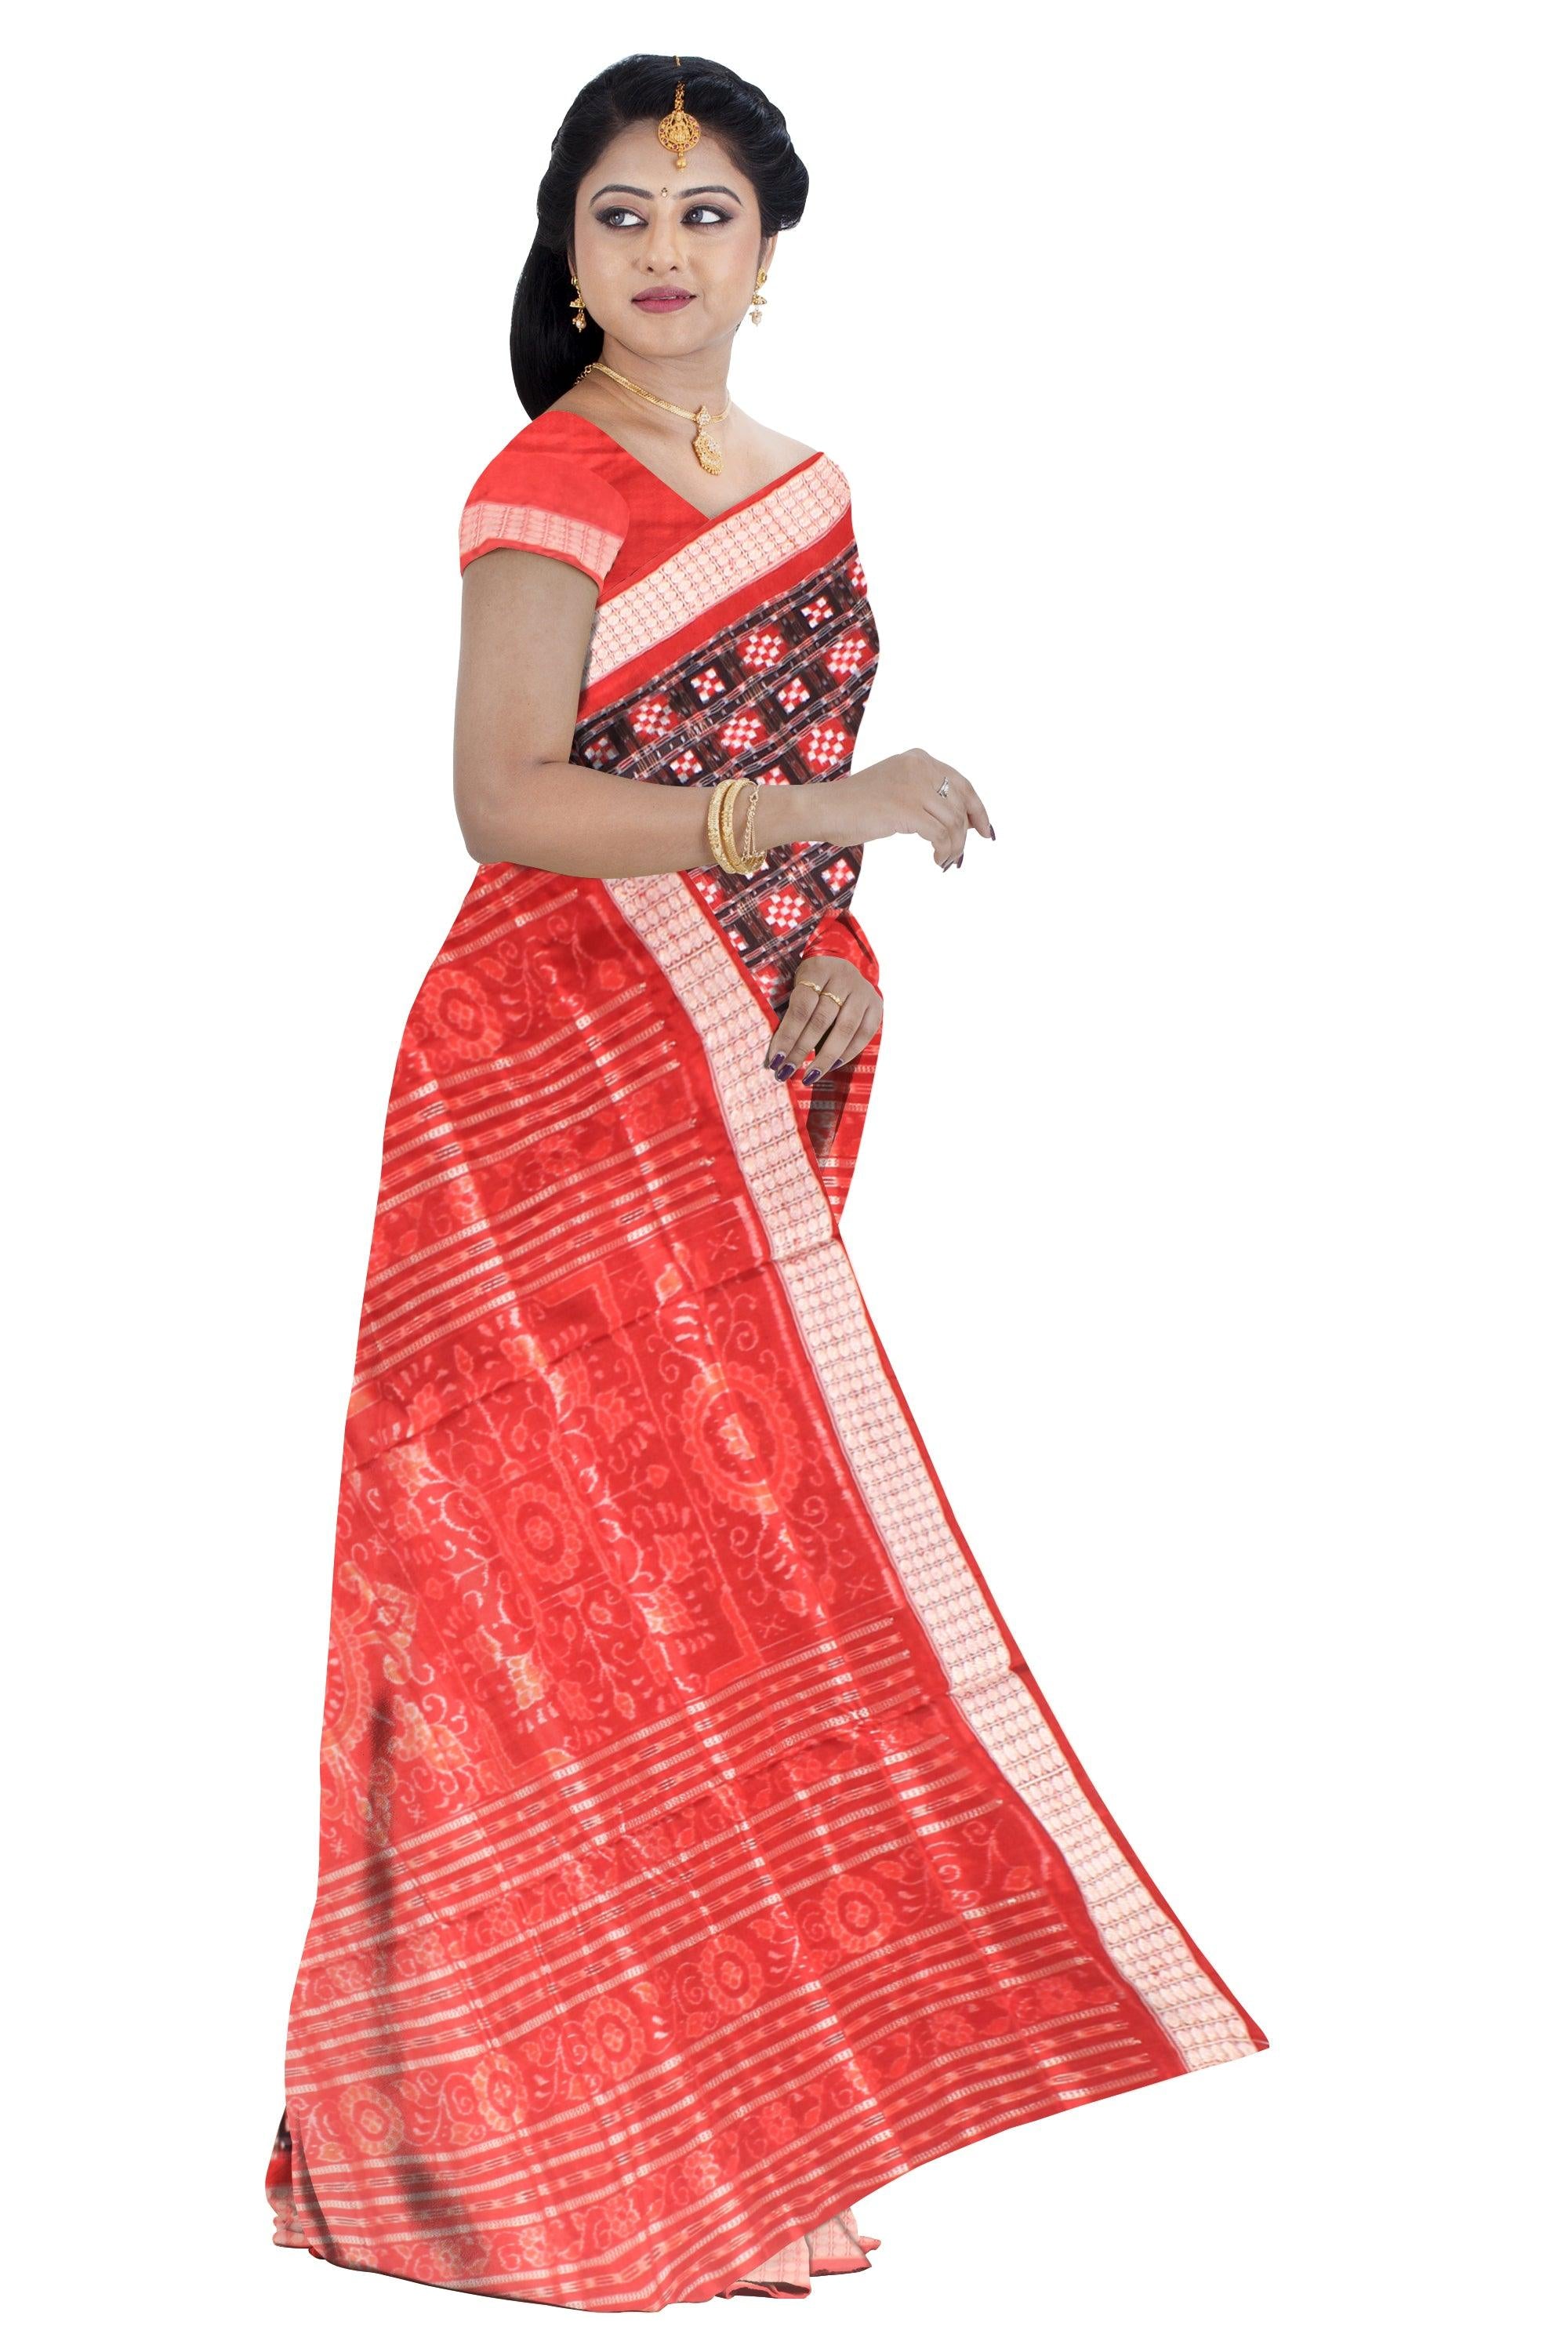 A Sambalpuri Pata saree in Red and Blak color Sapta design body,with blouse piece. - Koshali Arts & Crafts Enterprise